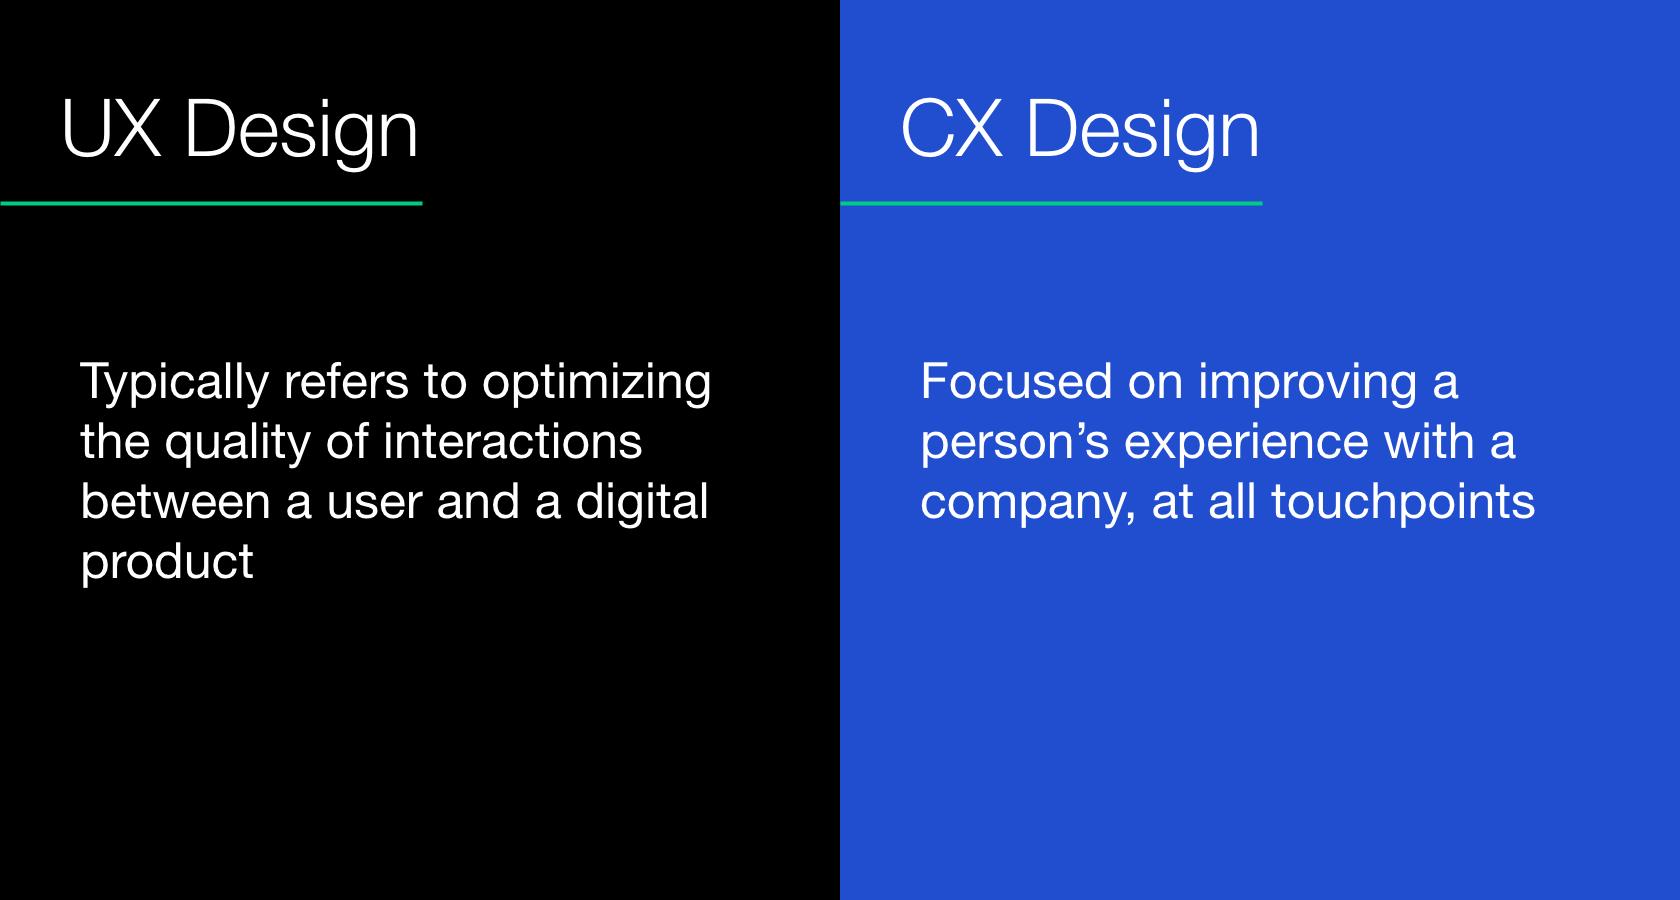 Different between “UX Design” and “CX Design”.